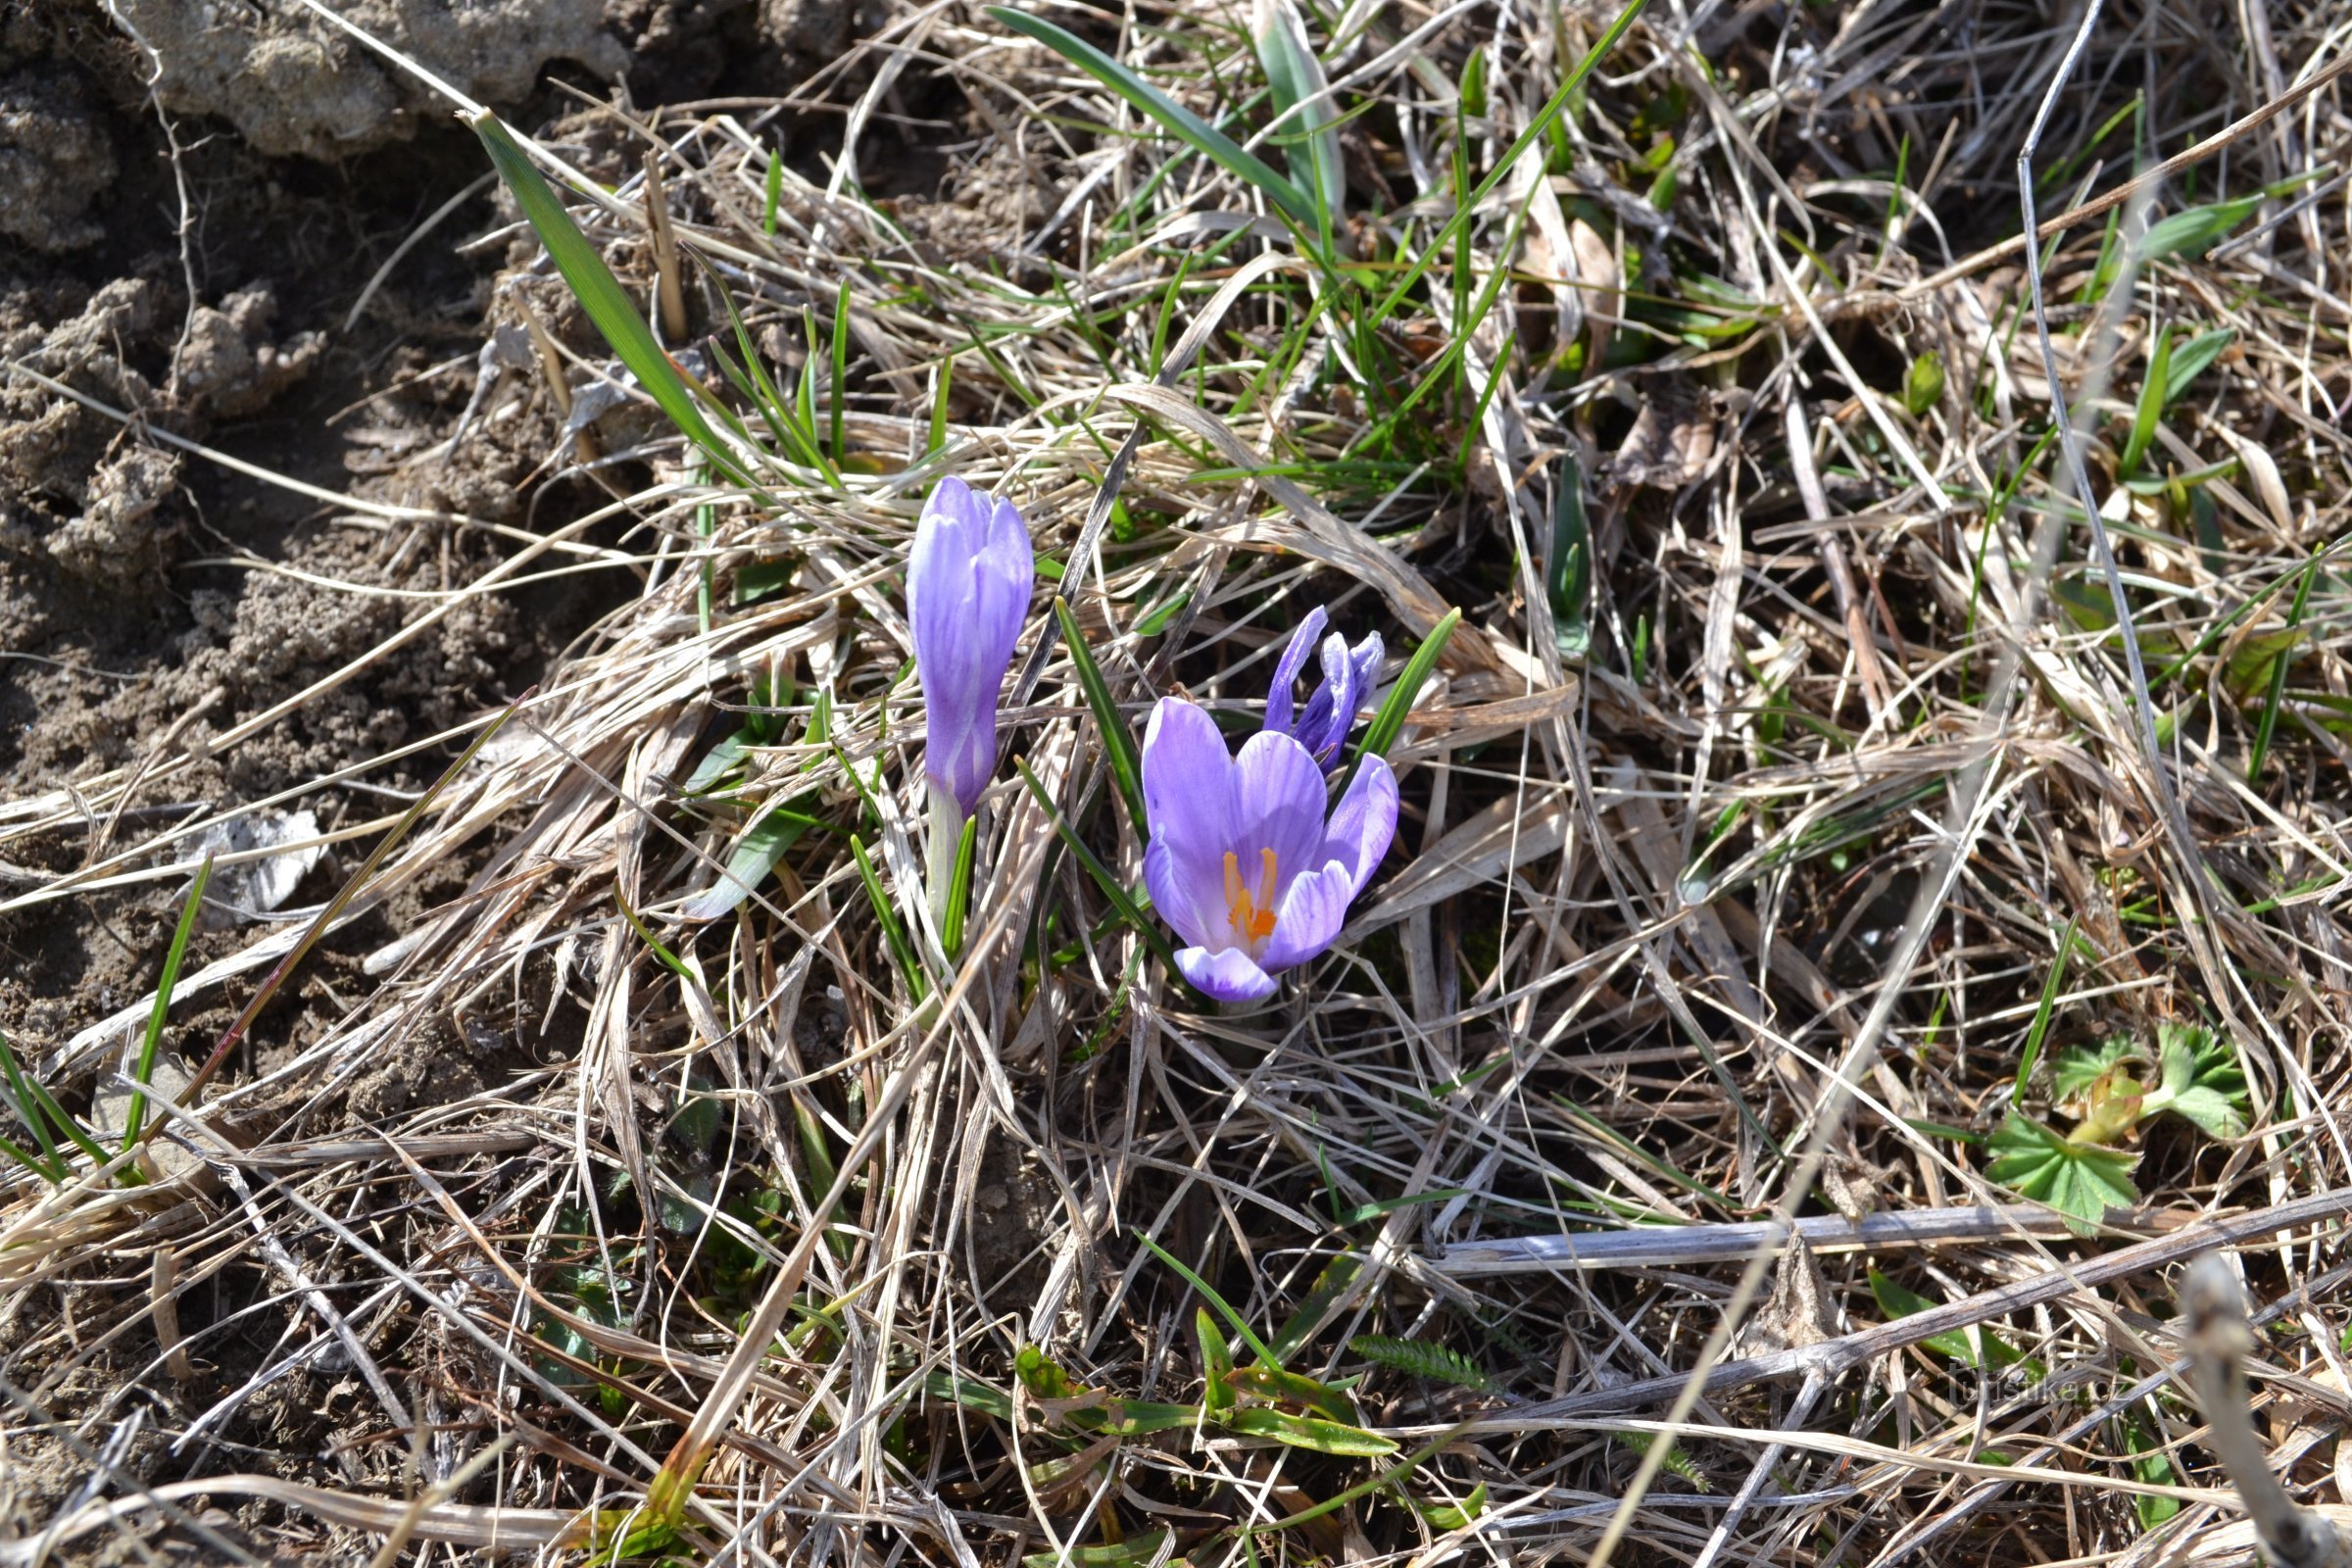 a small purple flower called white-flowered saffron